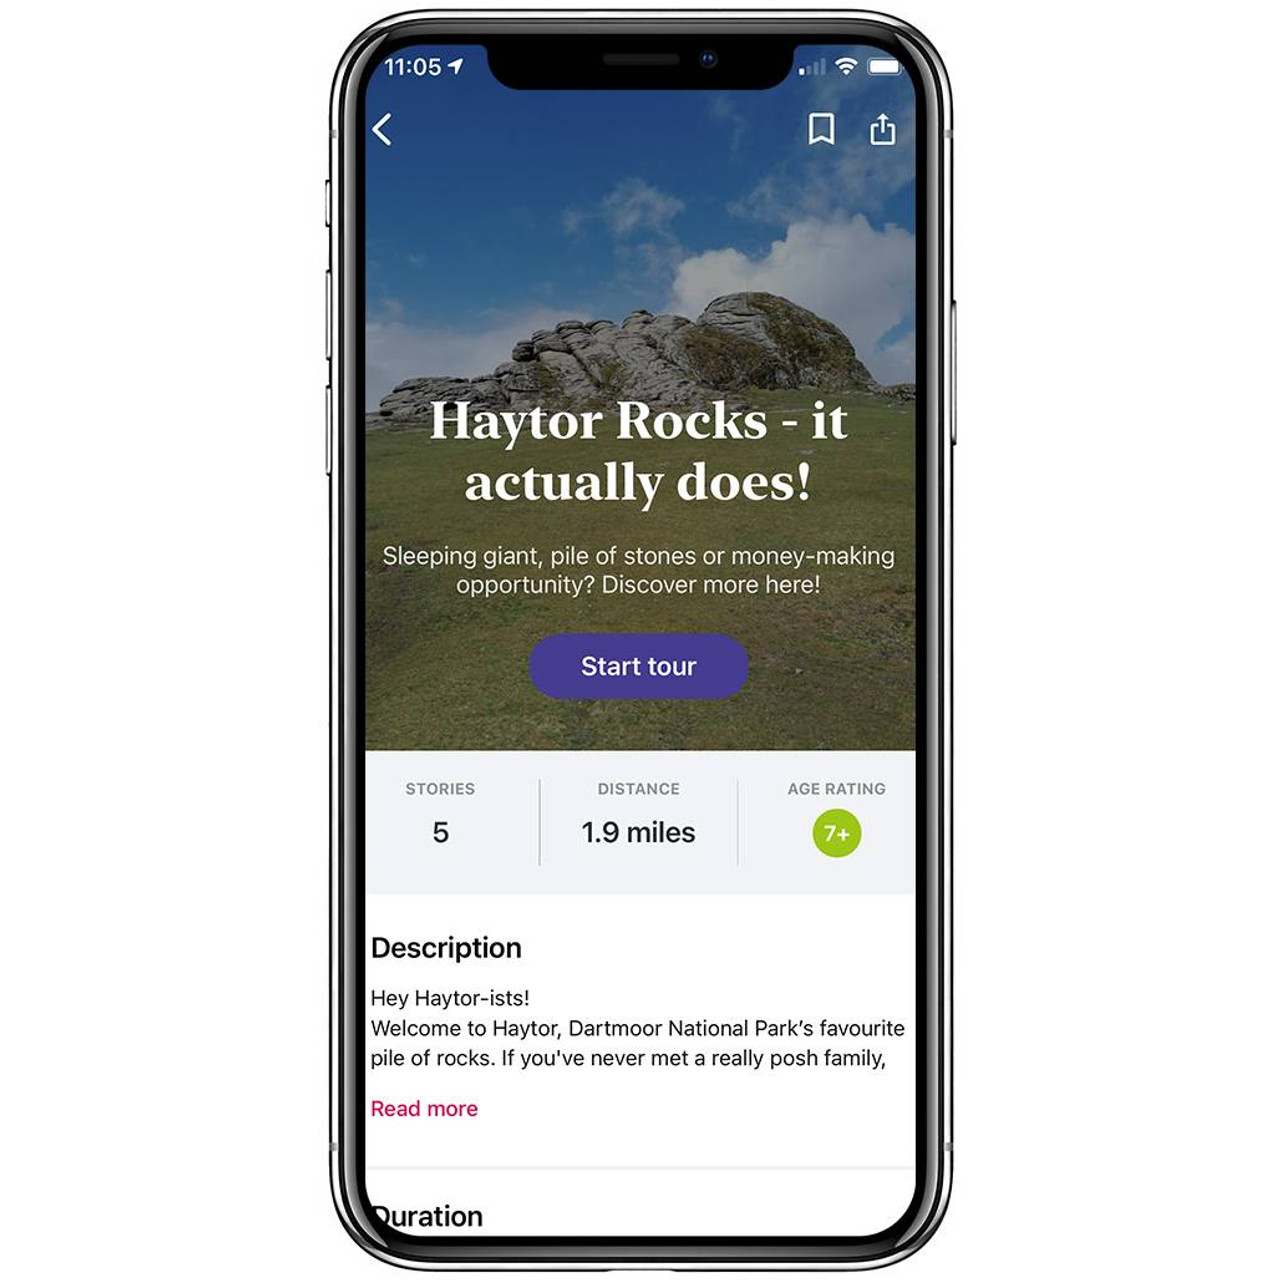 Haytor Rocks - It Actually Does!